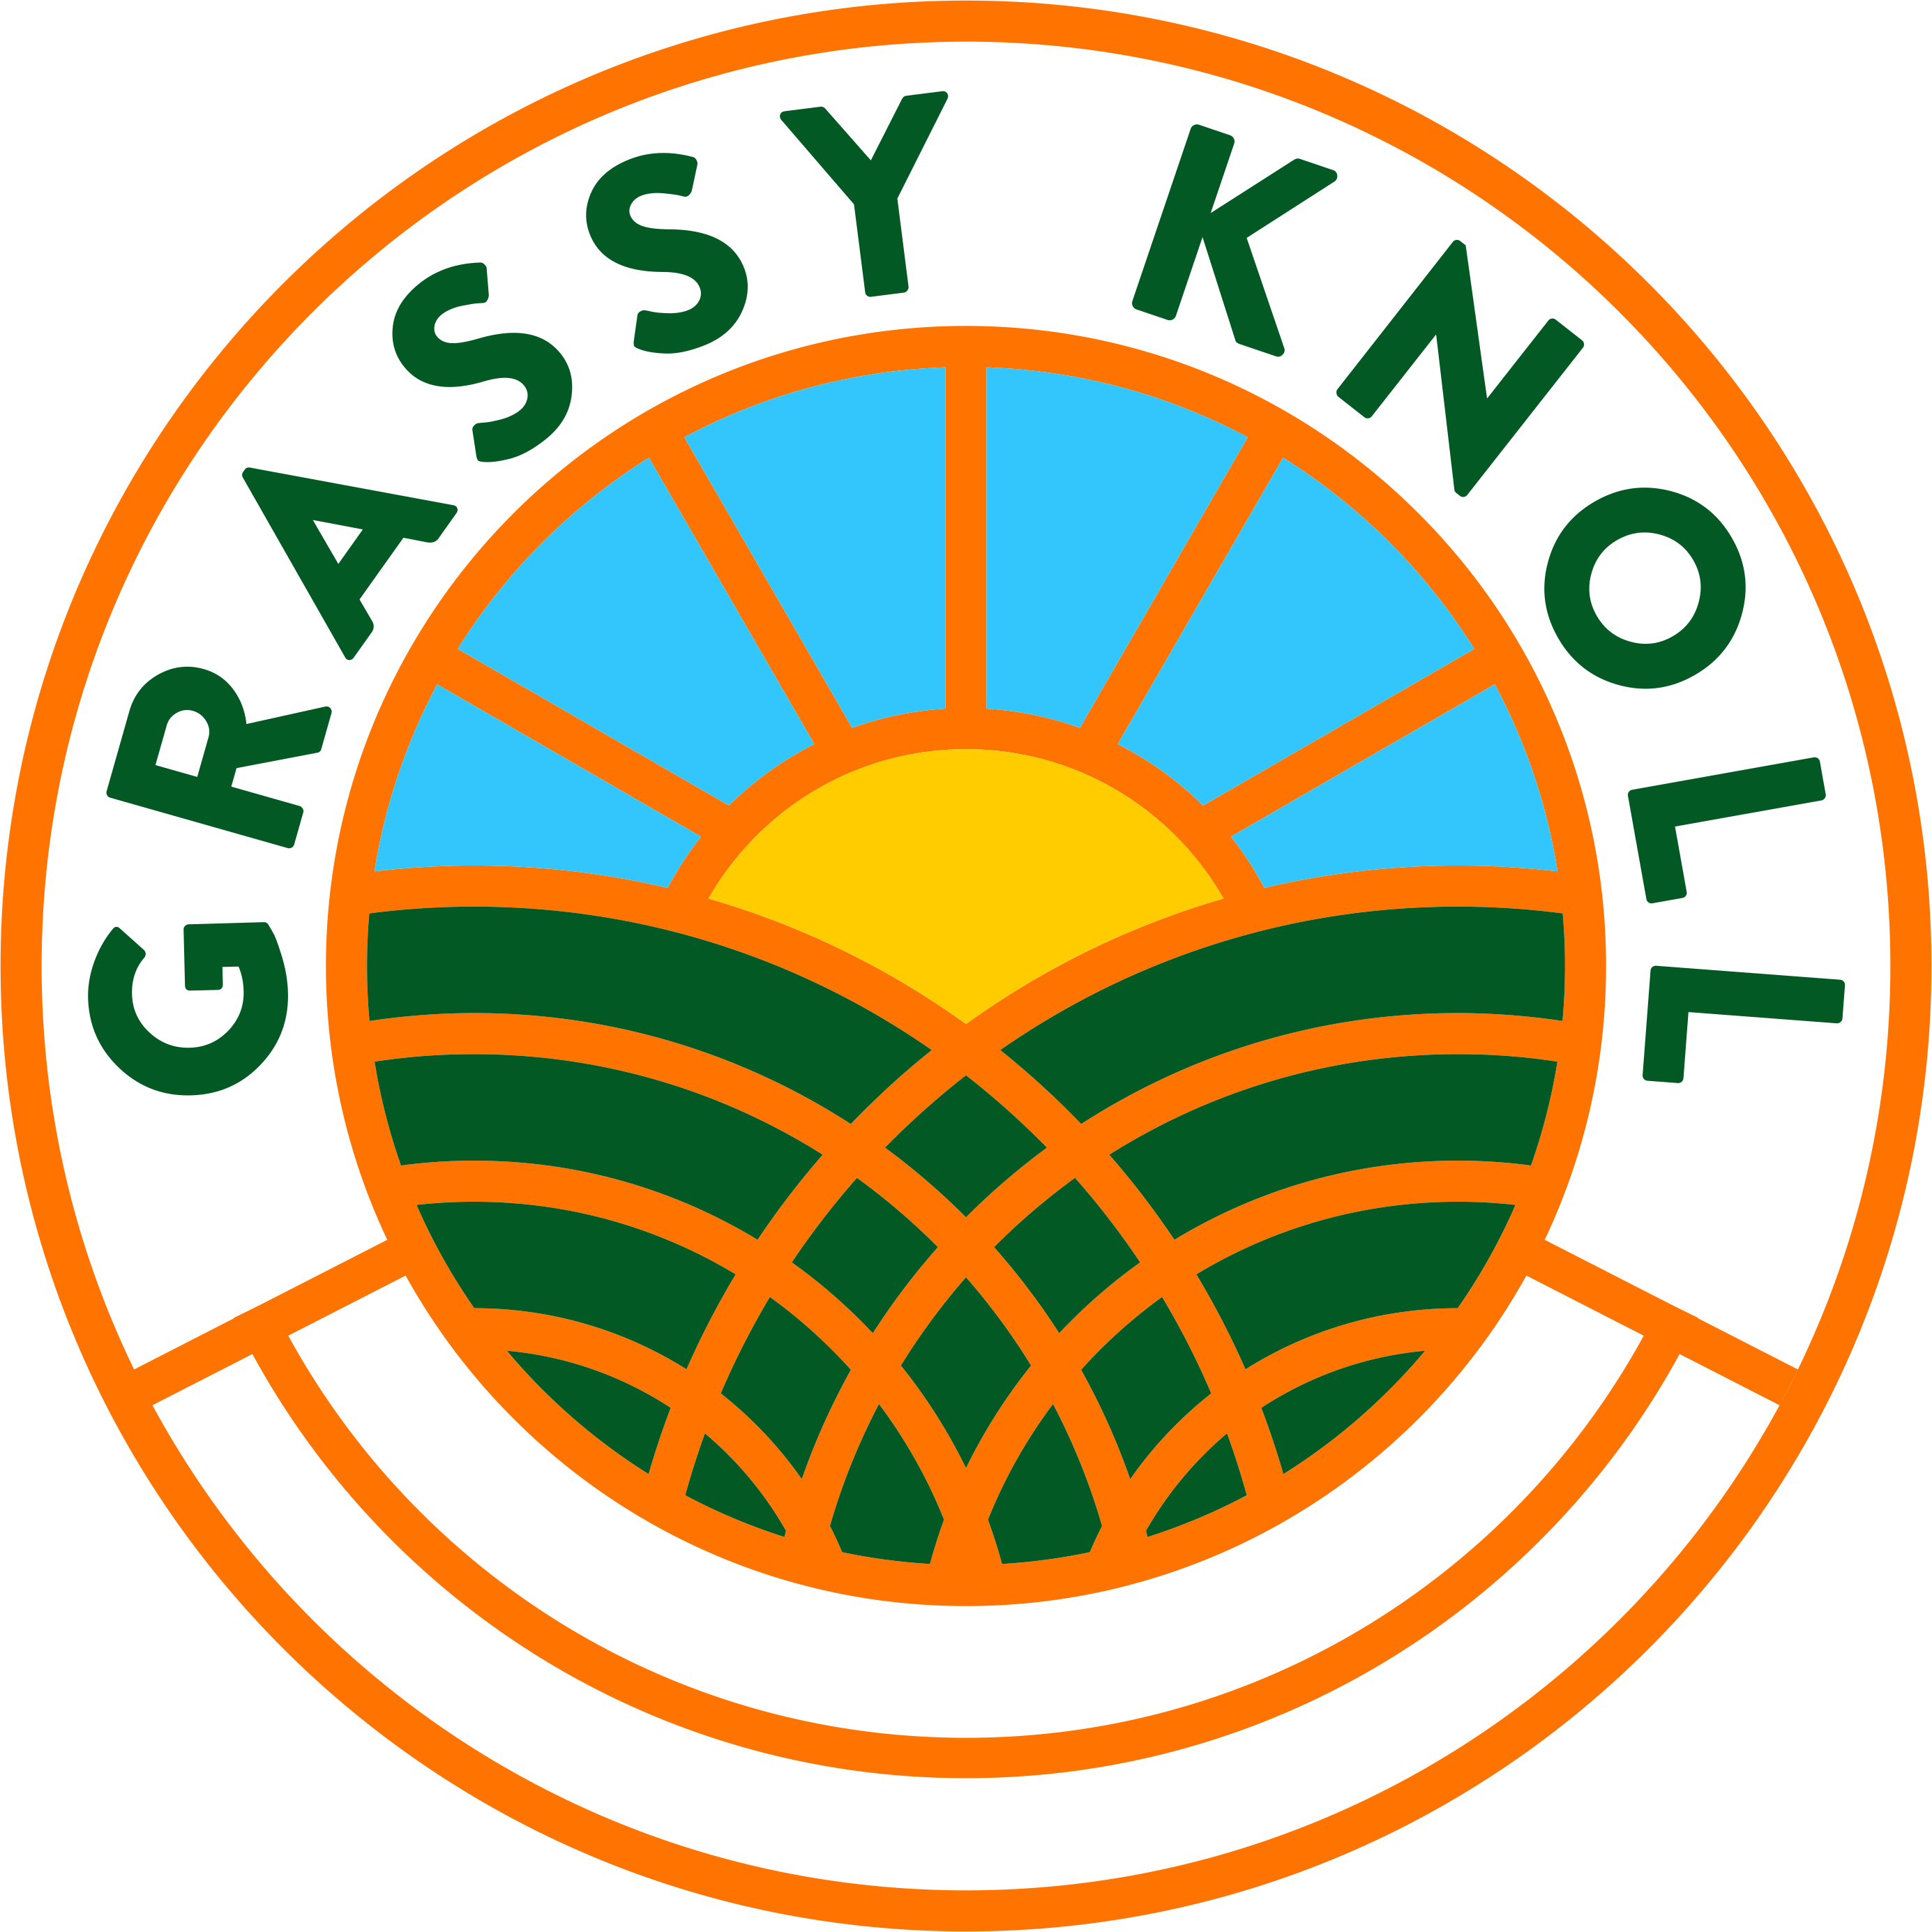 Grassy Knoll Dispensary